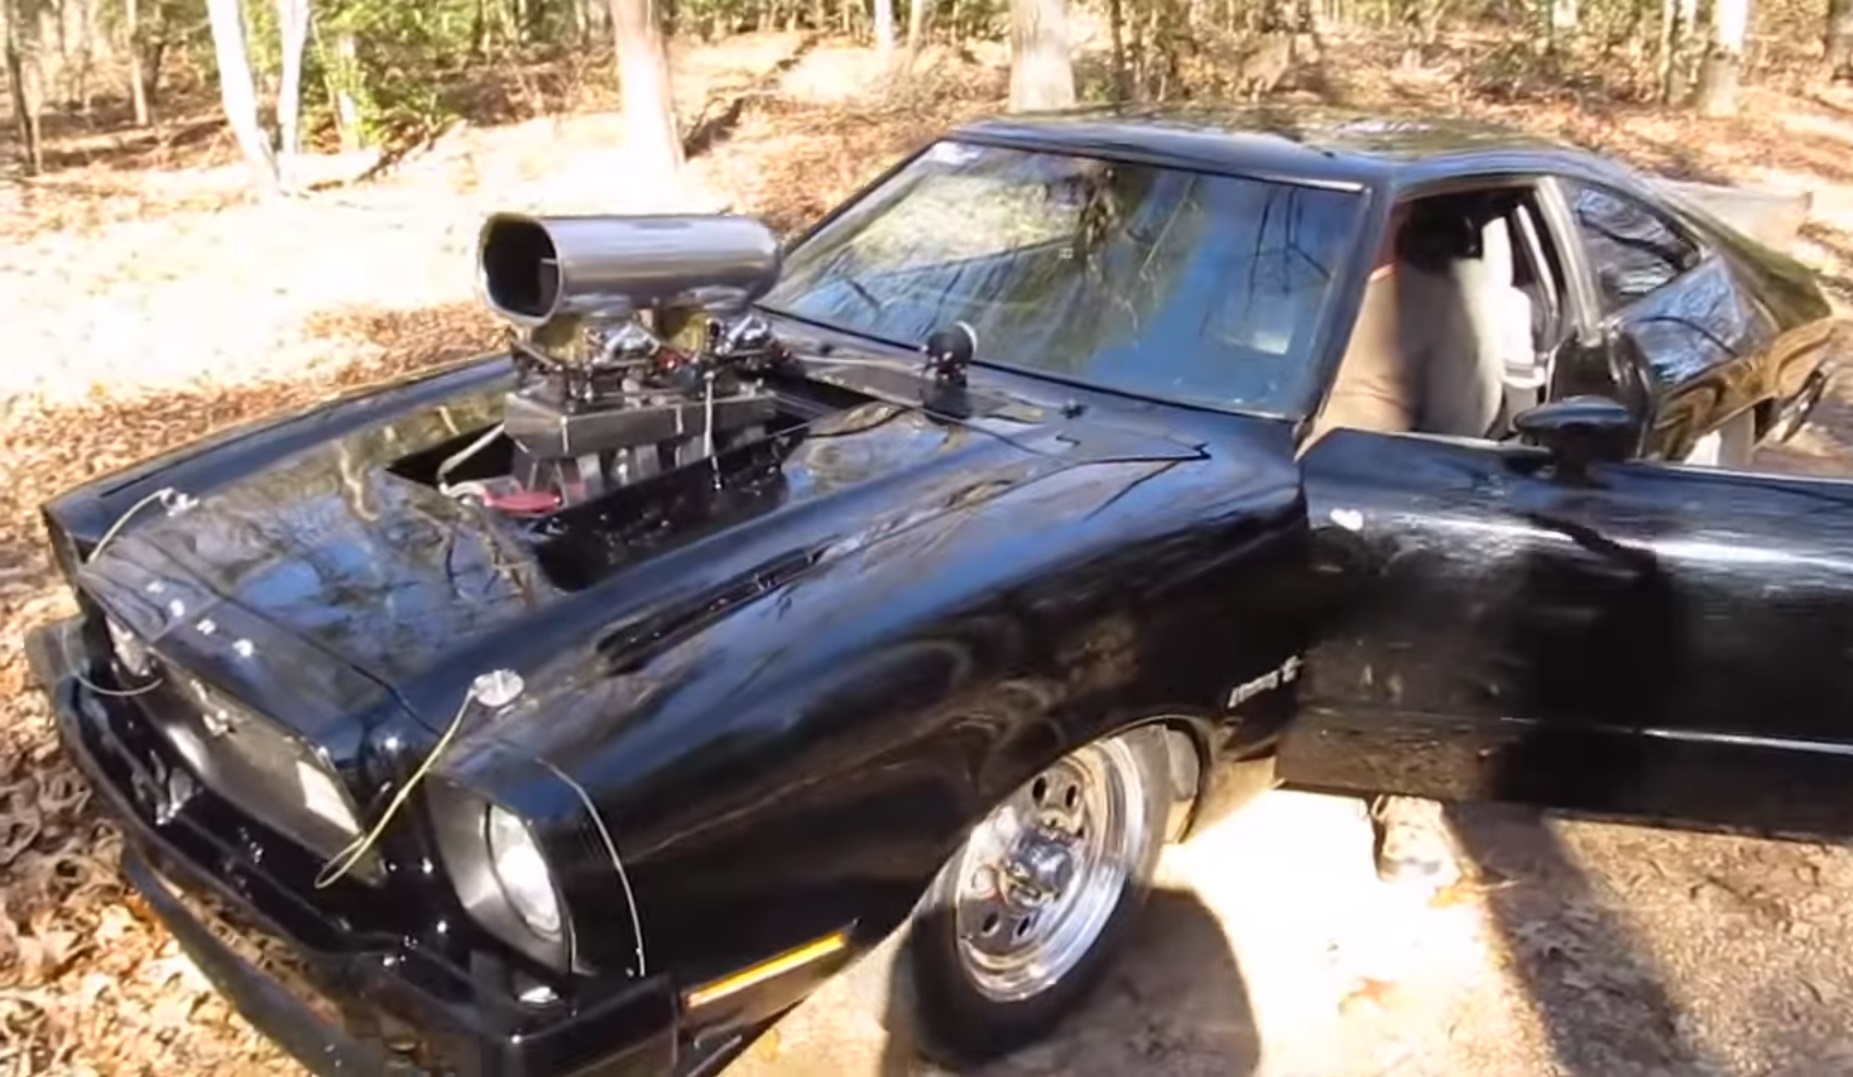 Video: 1974 Ford Mustang II Walkaround + Exhaust Sound